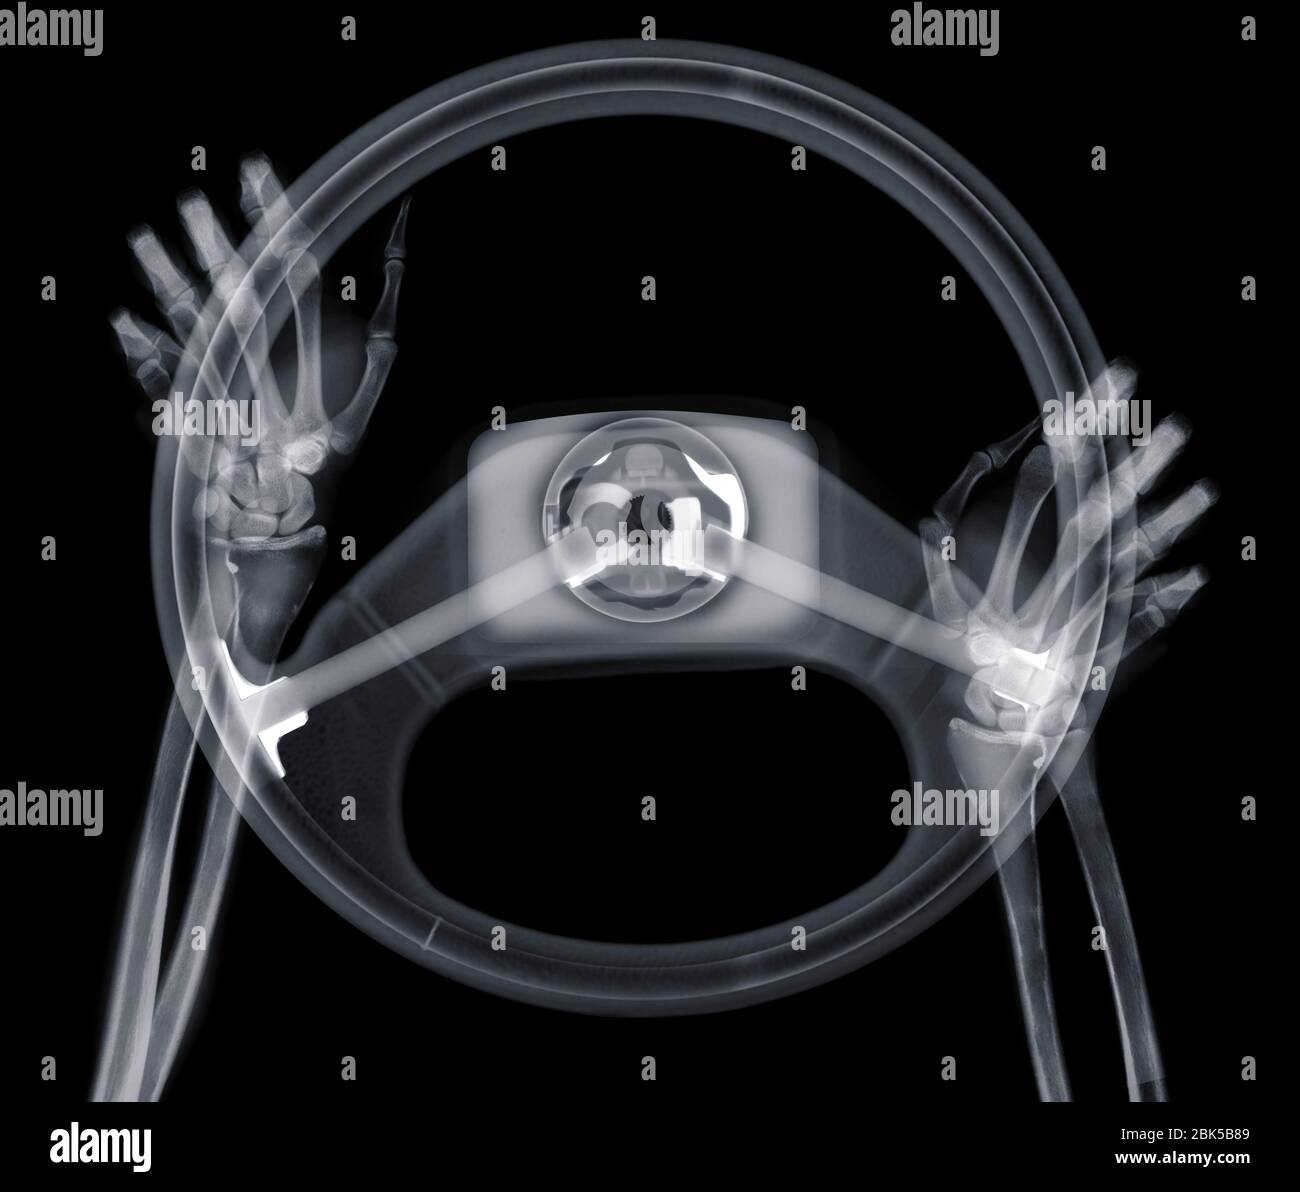 Human hands on steering wheel, X-ray. Stock Photo